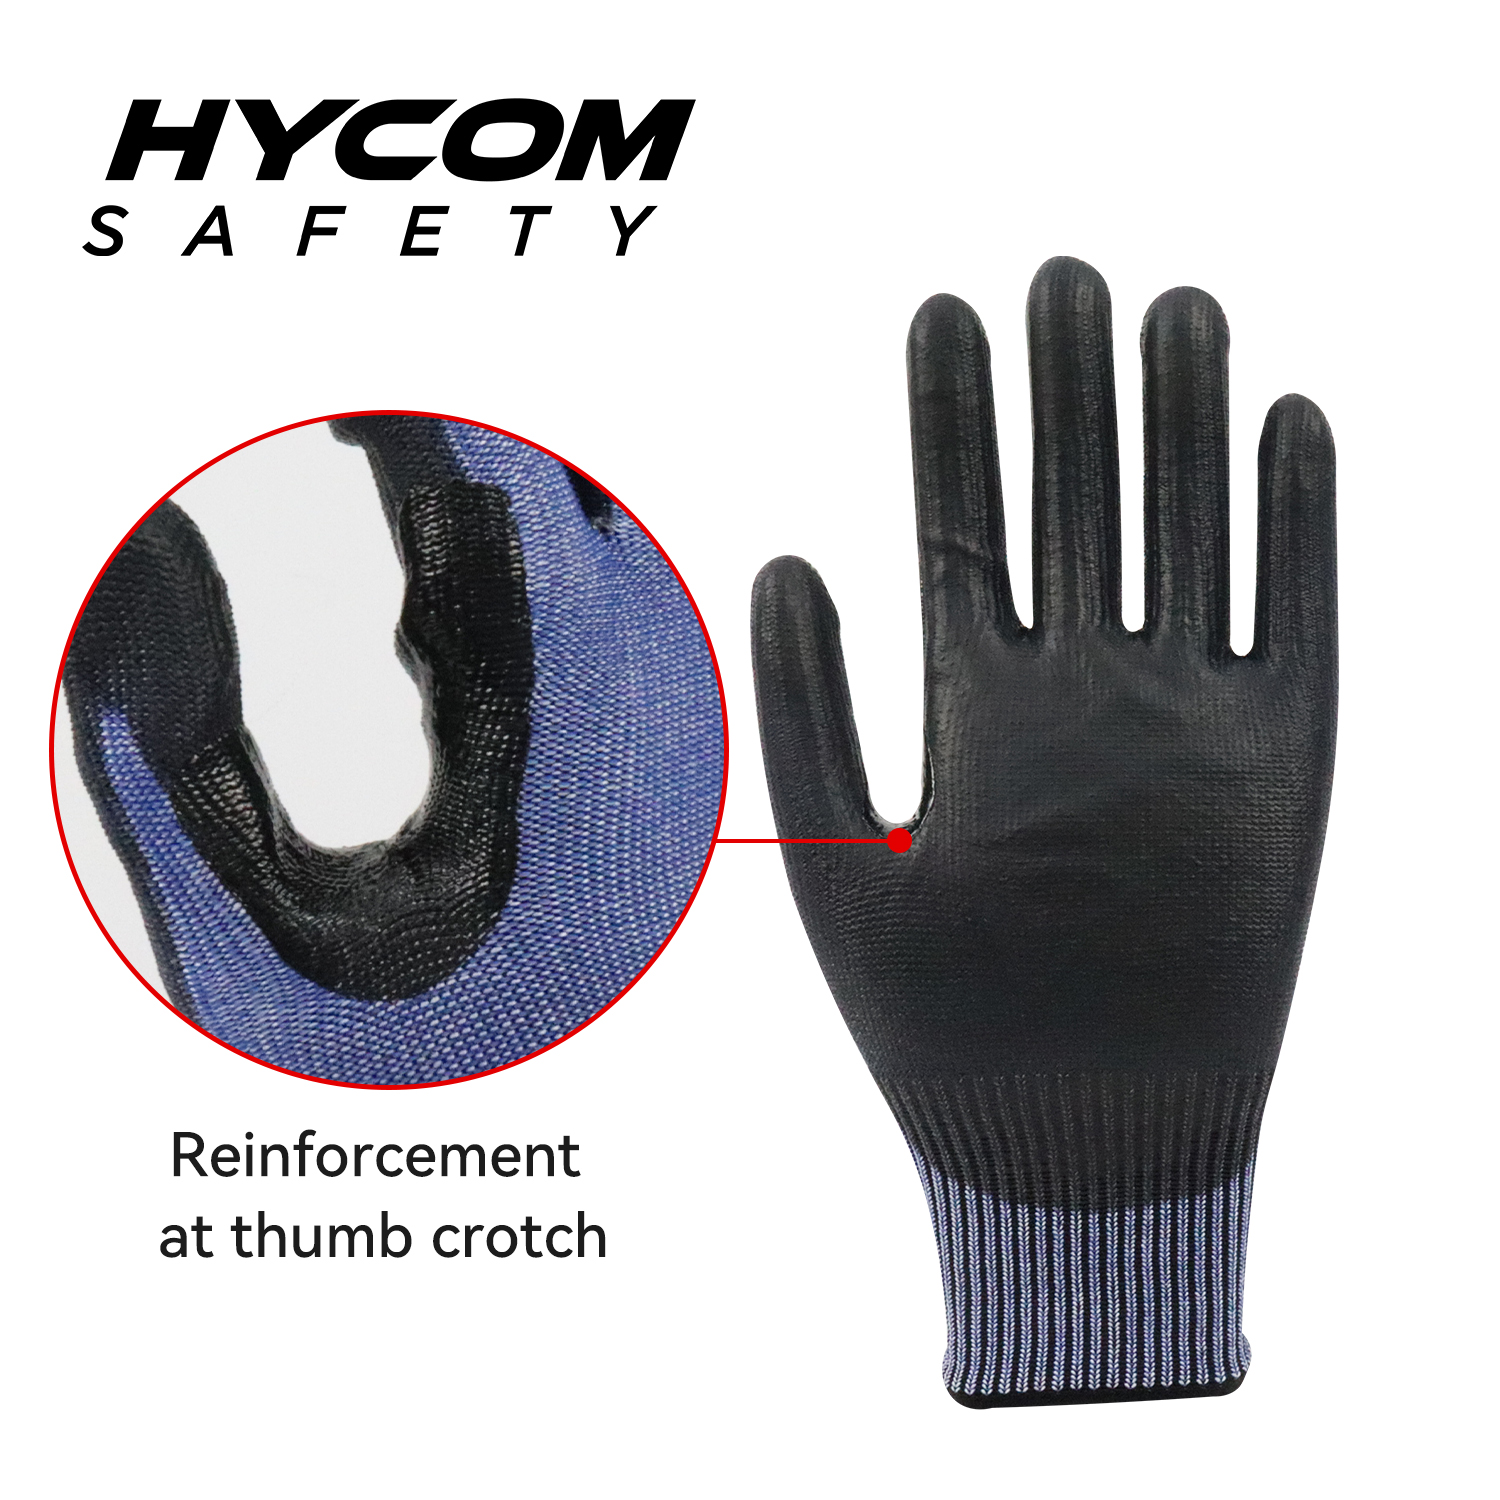 HYCOM 13G ANSI 4cut Resistant Glove with Palm Polyurethane Coating